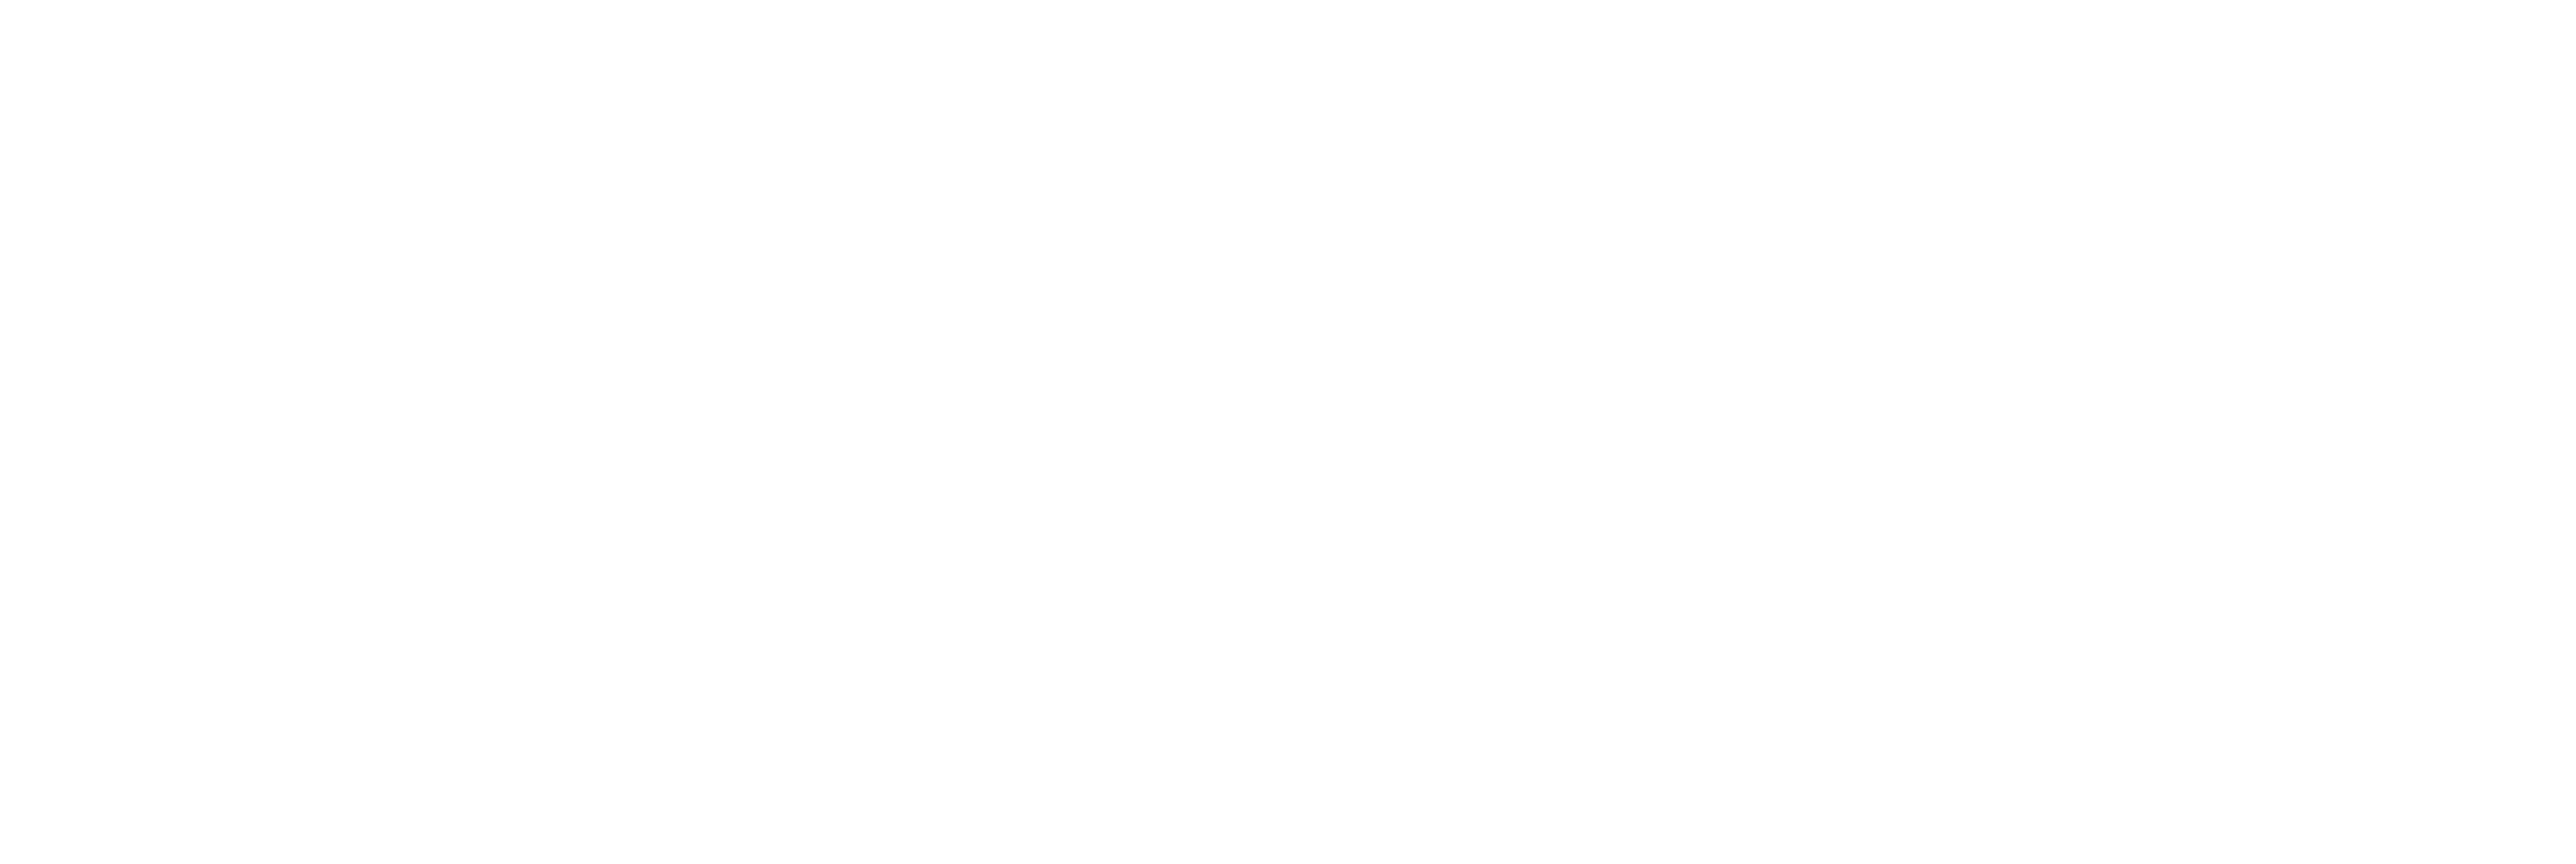 Masterful Health Advocates